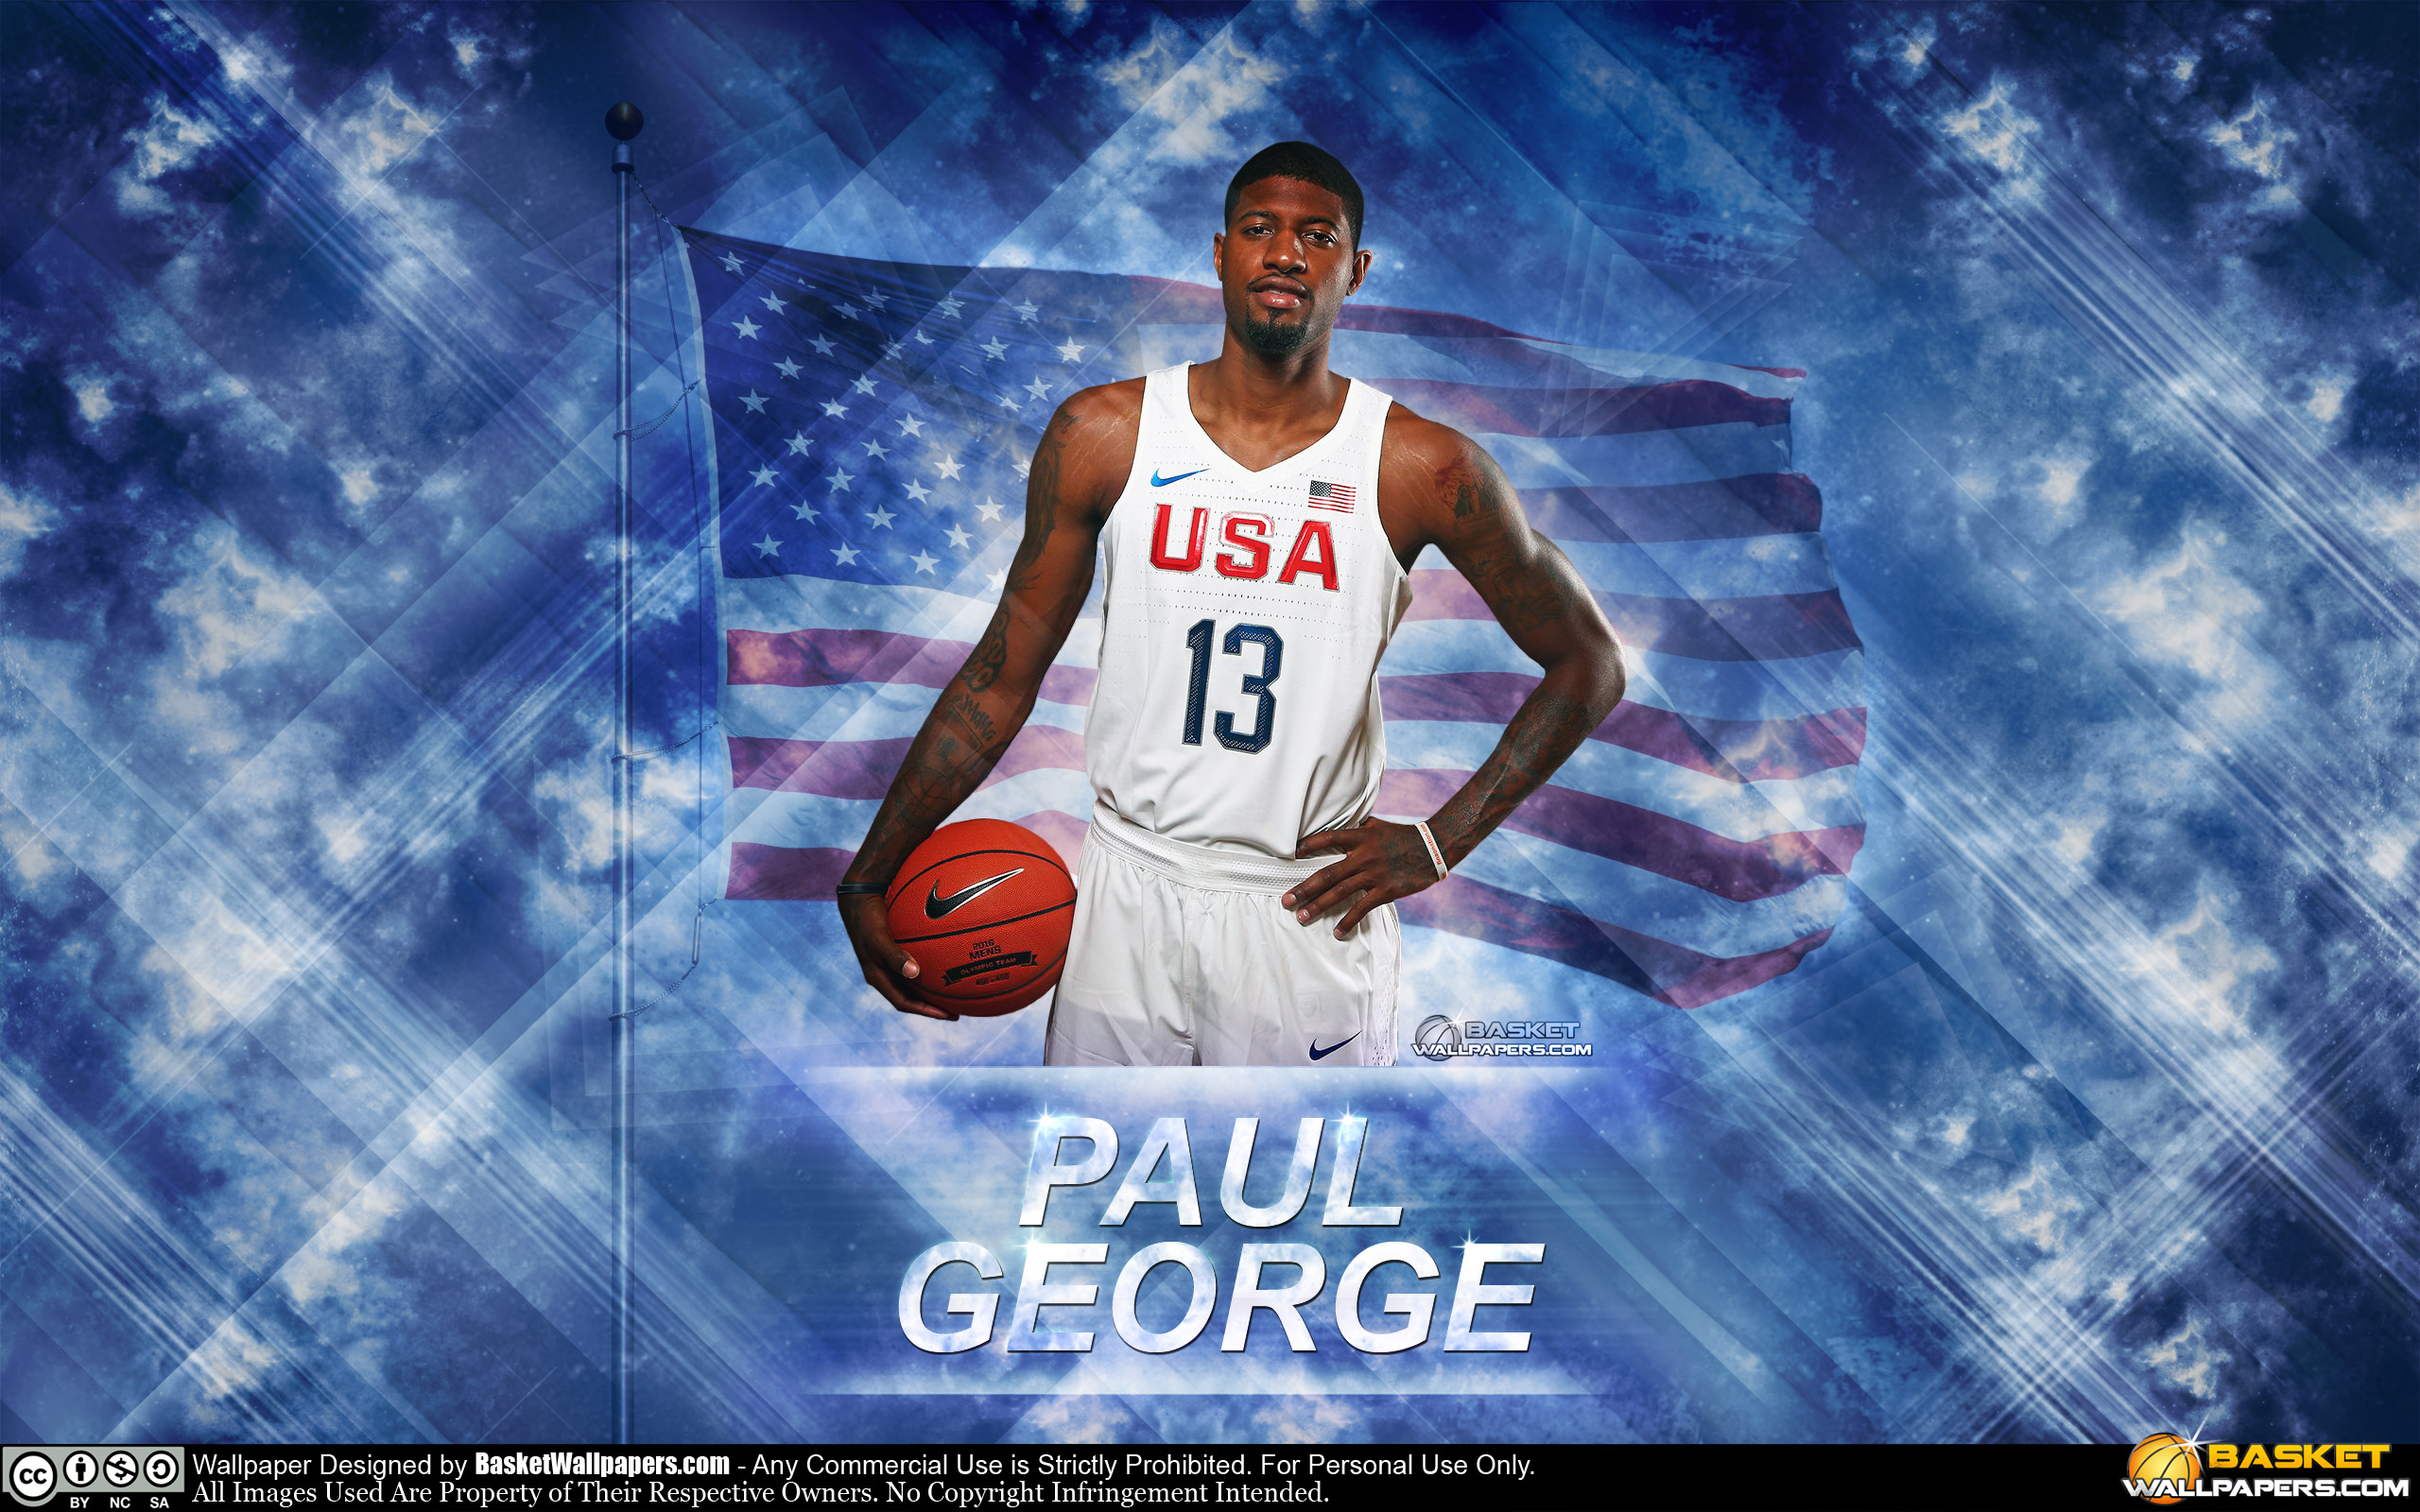 Paul George USA 2016 Olympics Wallpaper